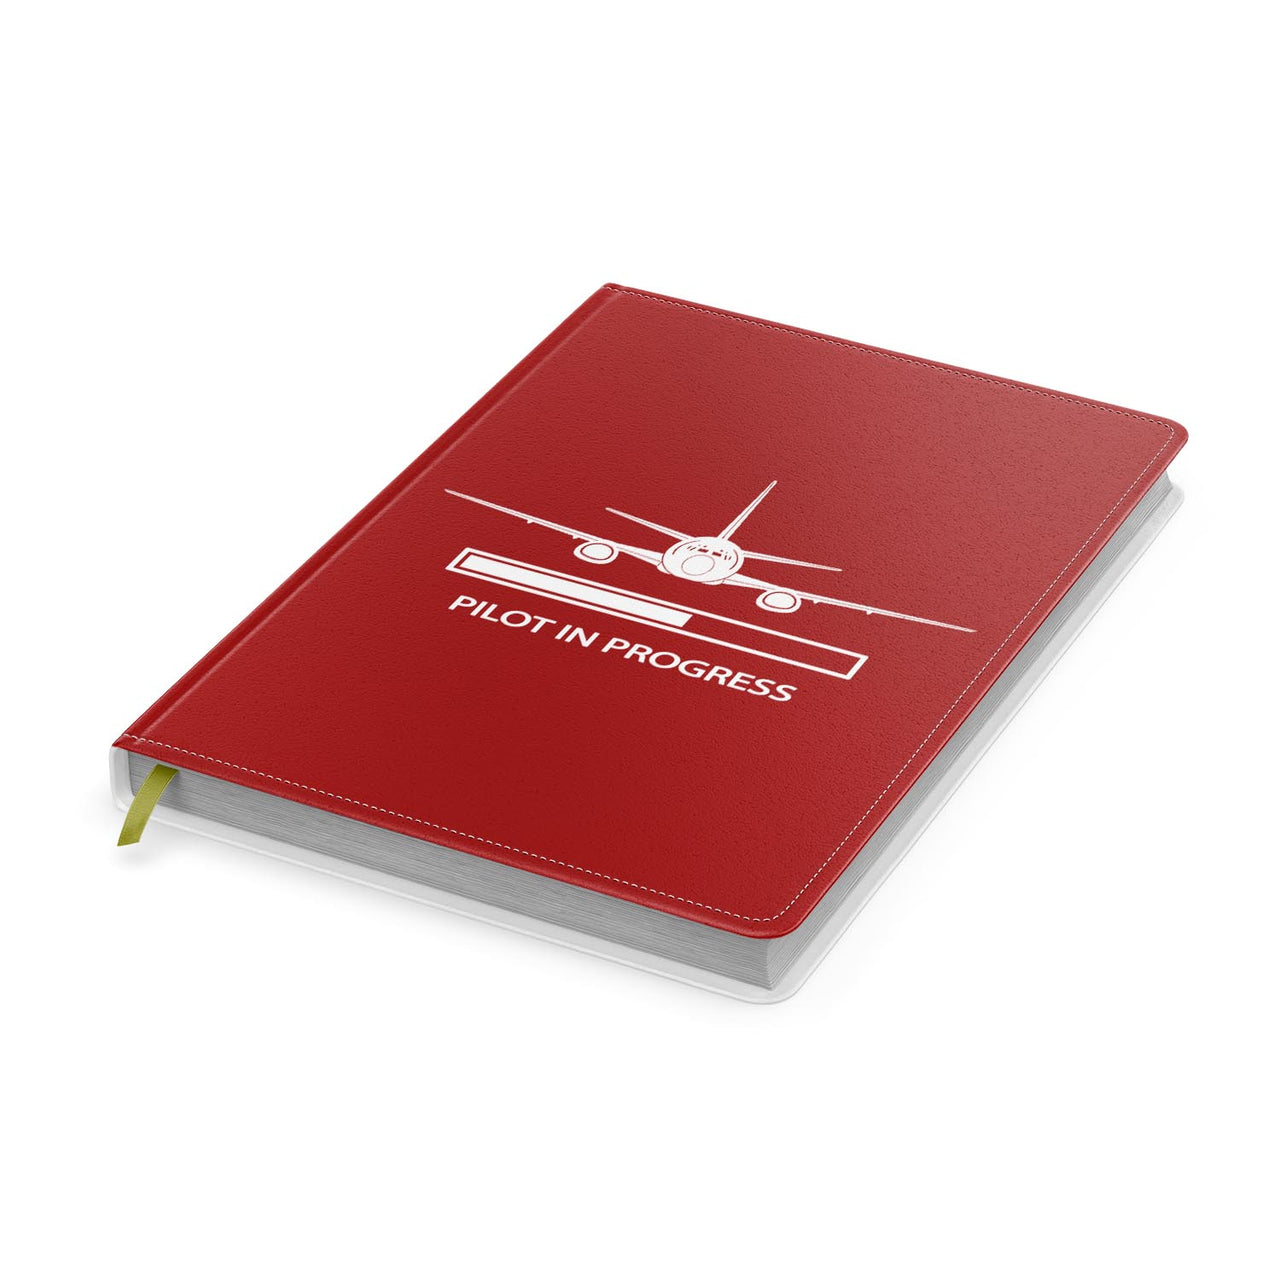 Pilot In Progress Designed Notebooks